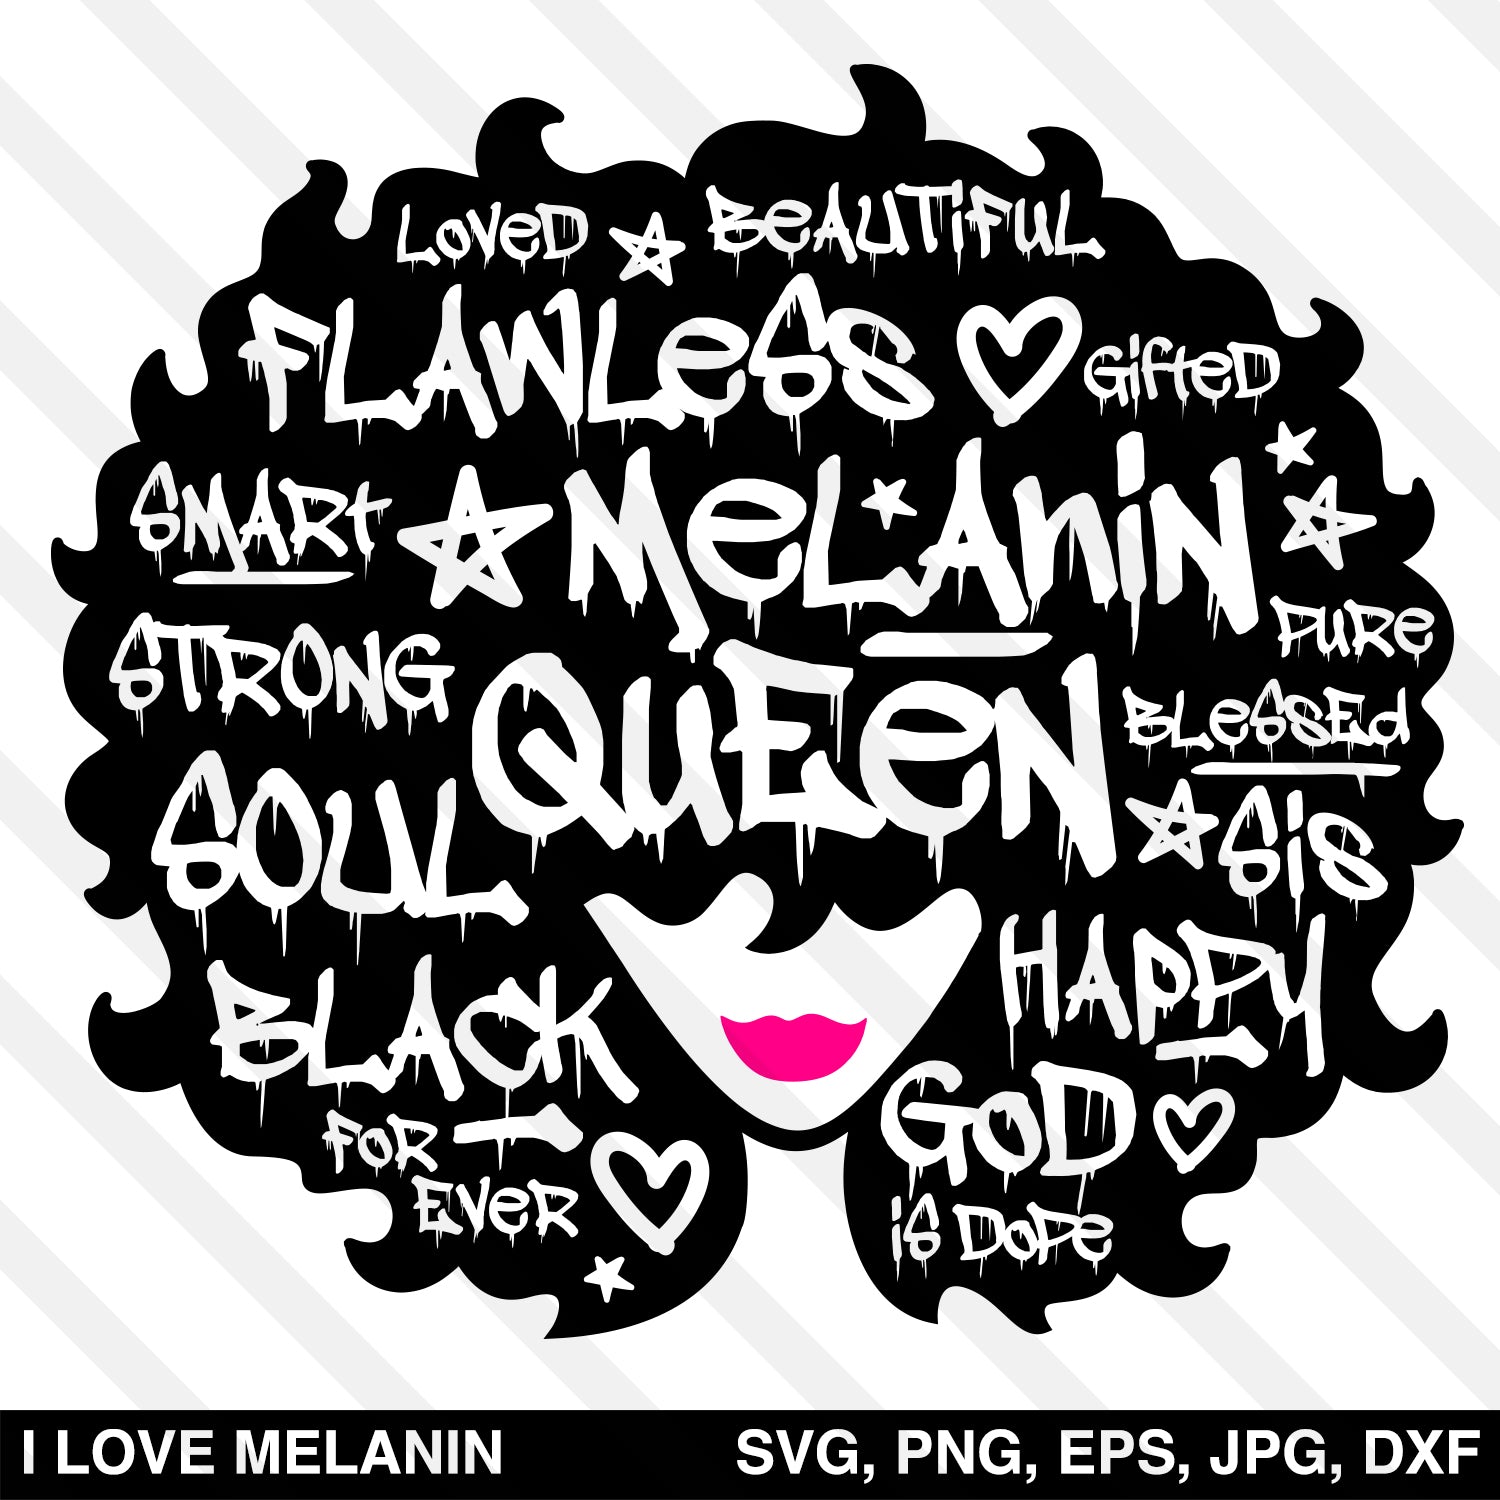 Download Graffiti Black Queen Afro Woman SVG - I Love Melanin